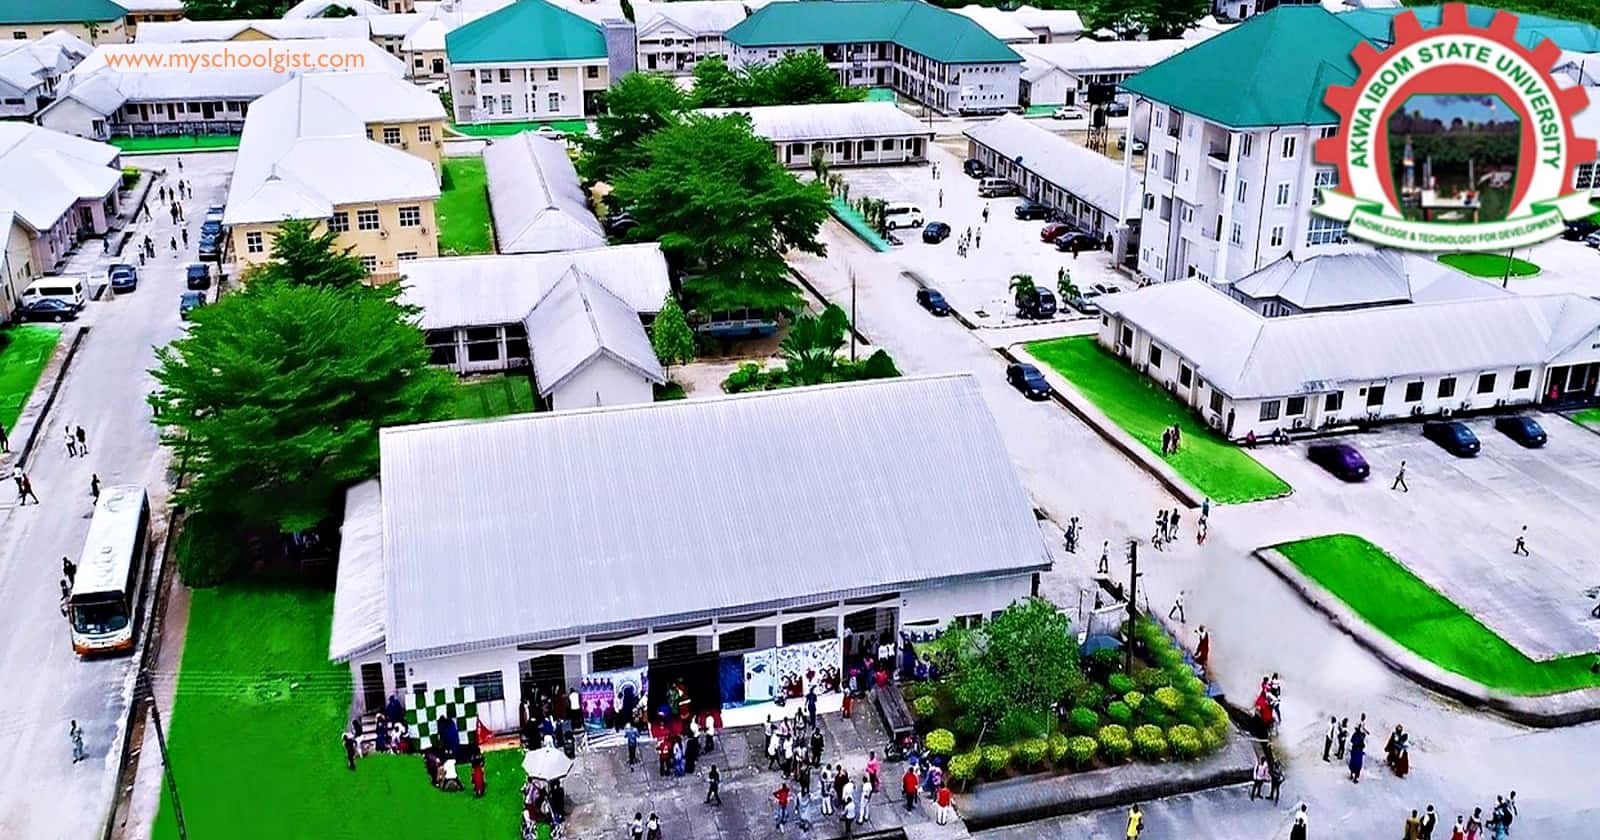 Akwa Ibom State University (AKSU) Postgraduate Courses